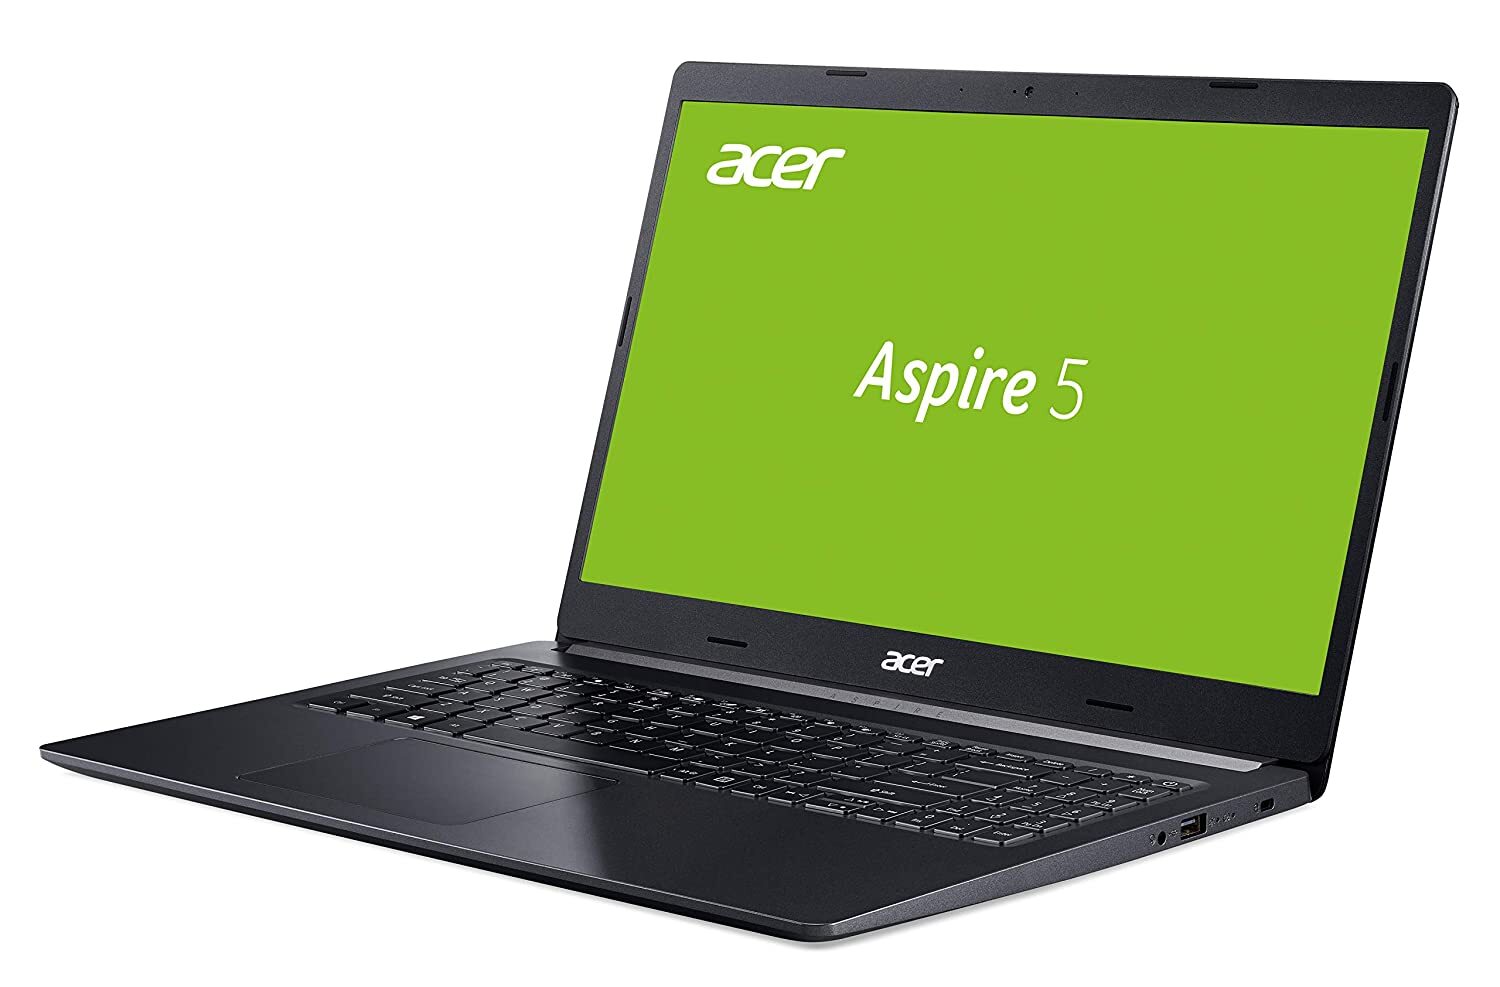 Acer Aspire 5 A515-54G Slim 10thGeneration Corei7-10210U 8GB RAM,512GB SSD,2GB MX250 Graphics 15.6" FHD Windows 10 Laptop Silver-M000000000323 www.mysocially.com